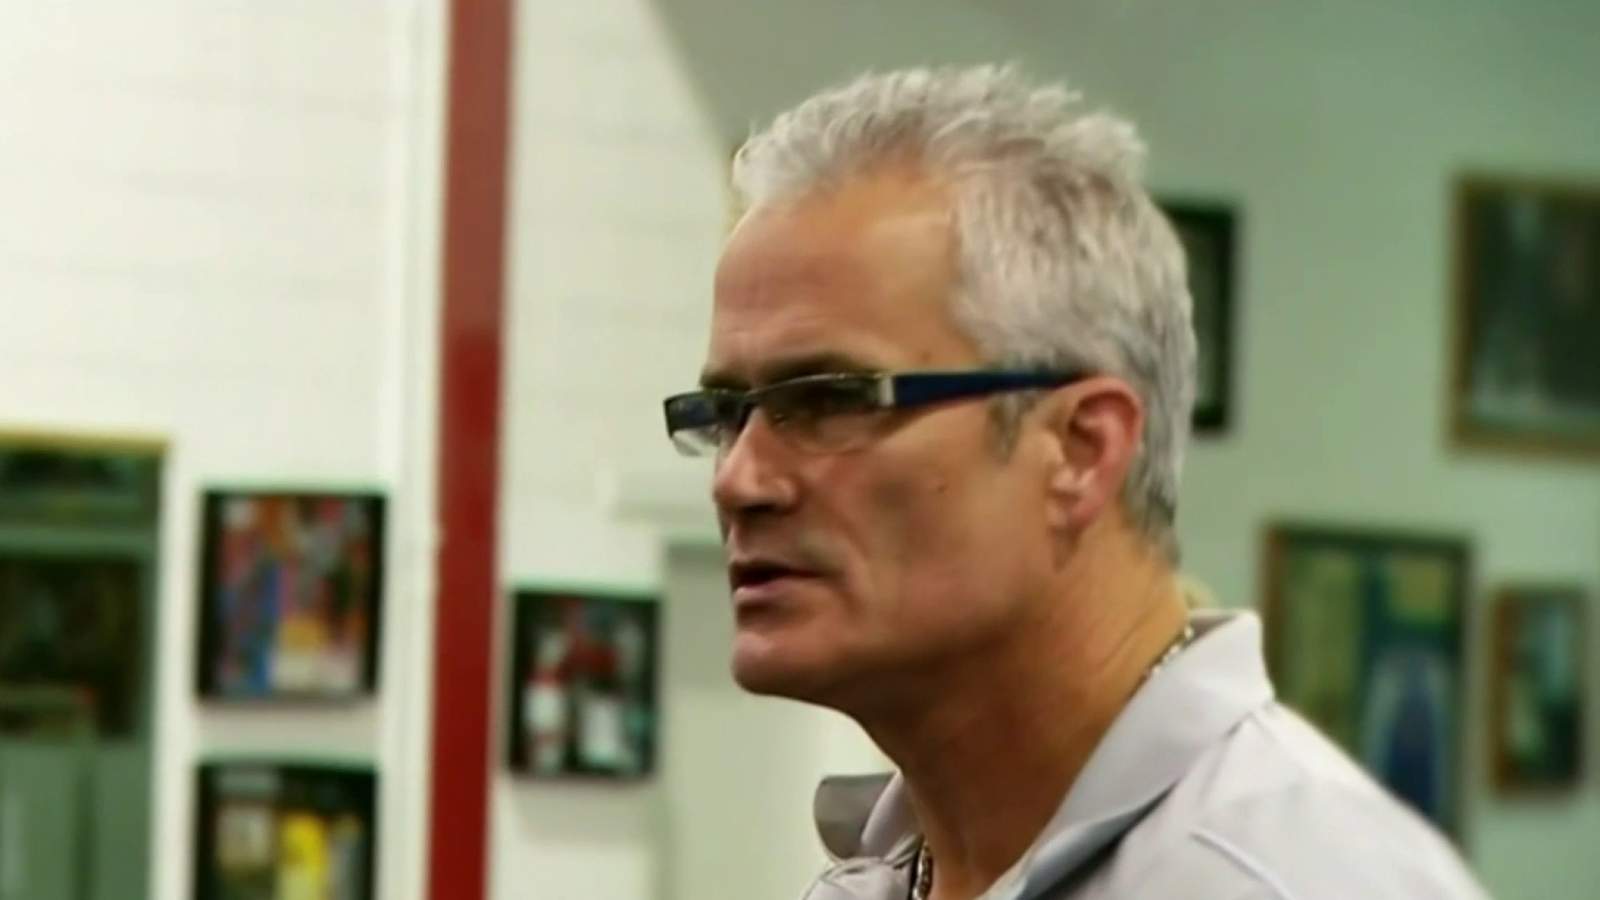 Gymnasts, parents react to death of former coach John Geddert